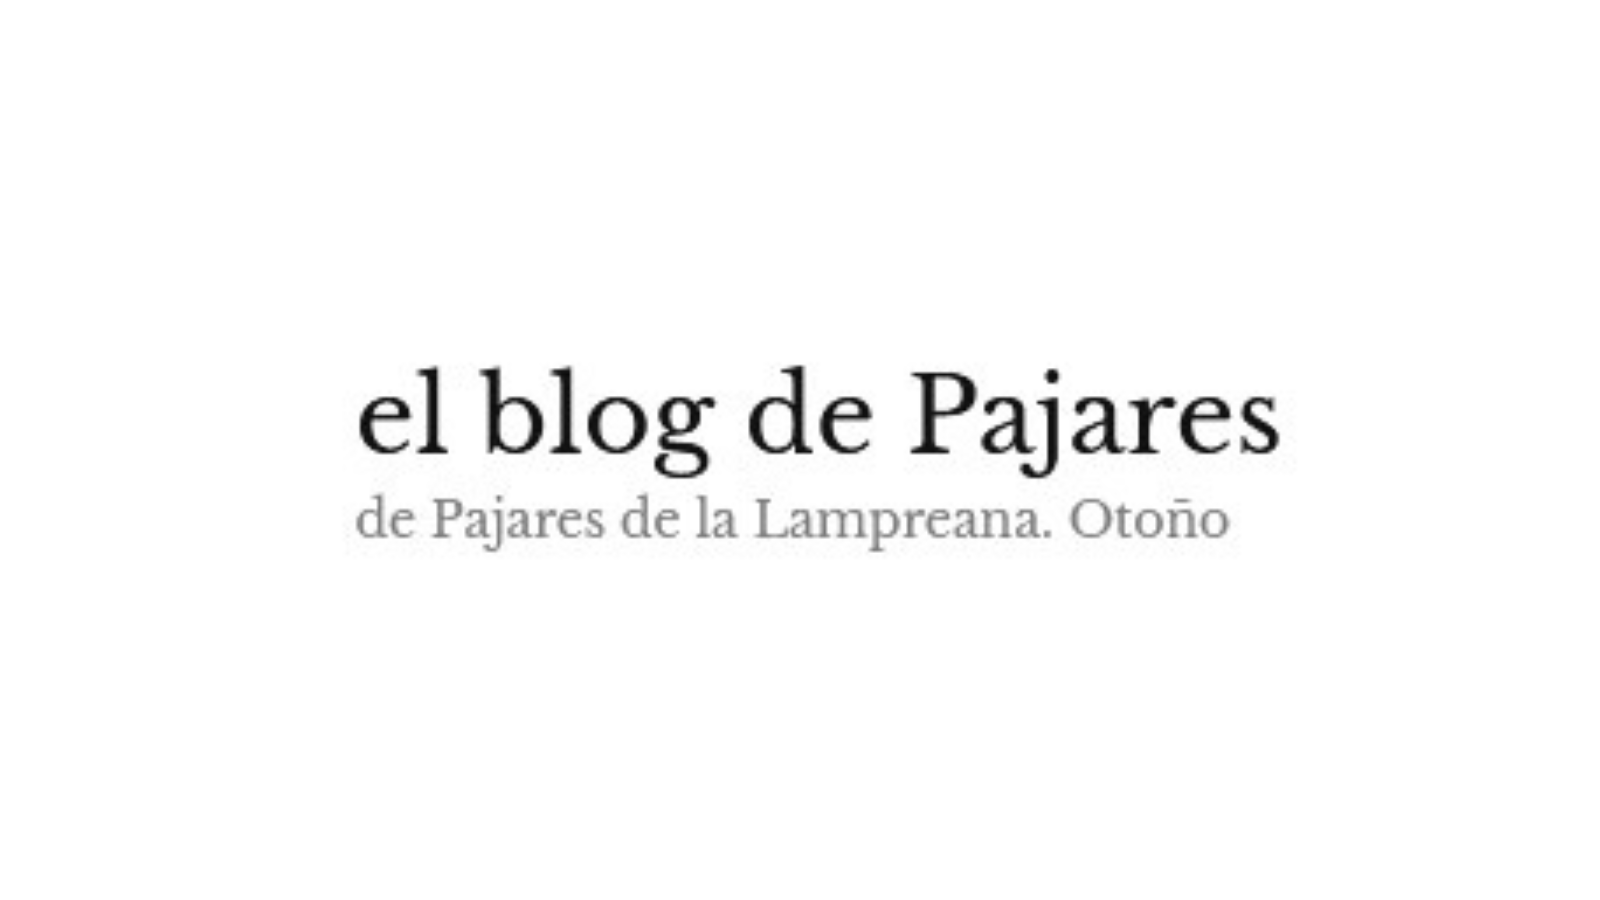 elblog de pajares 200x200